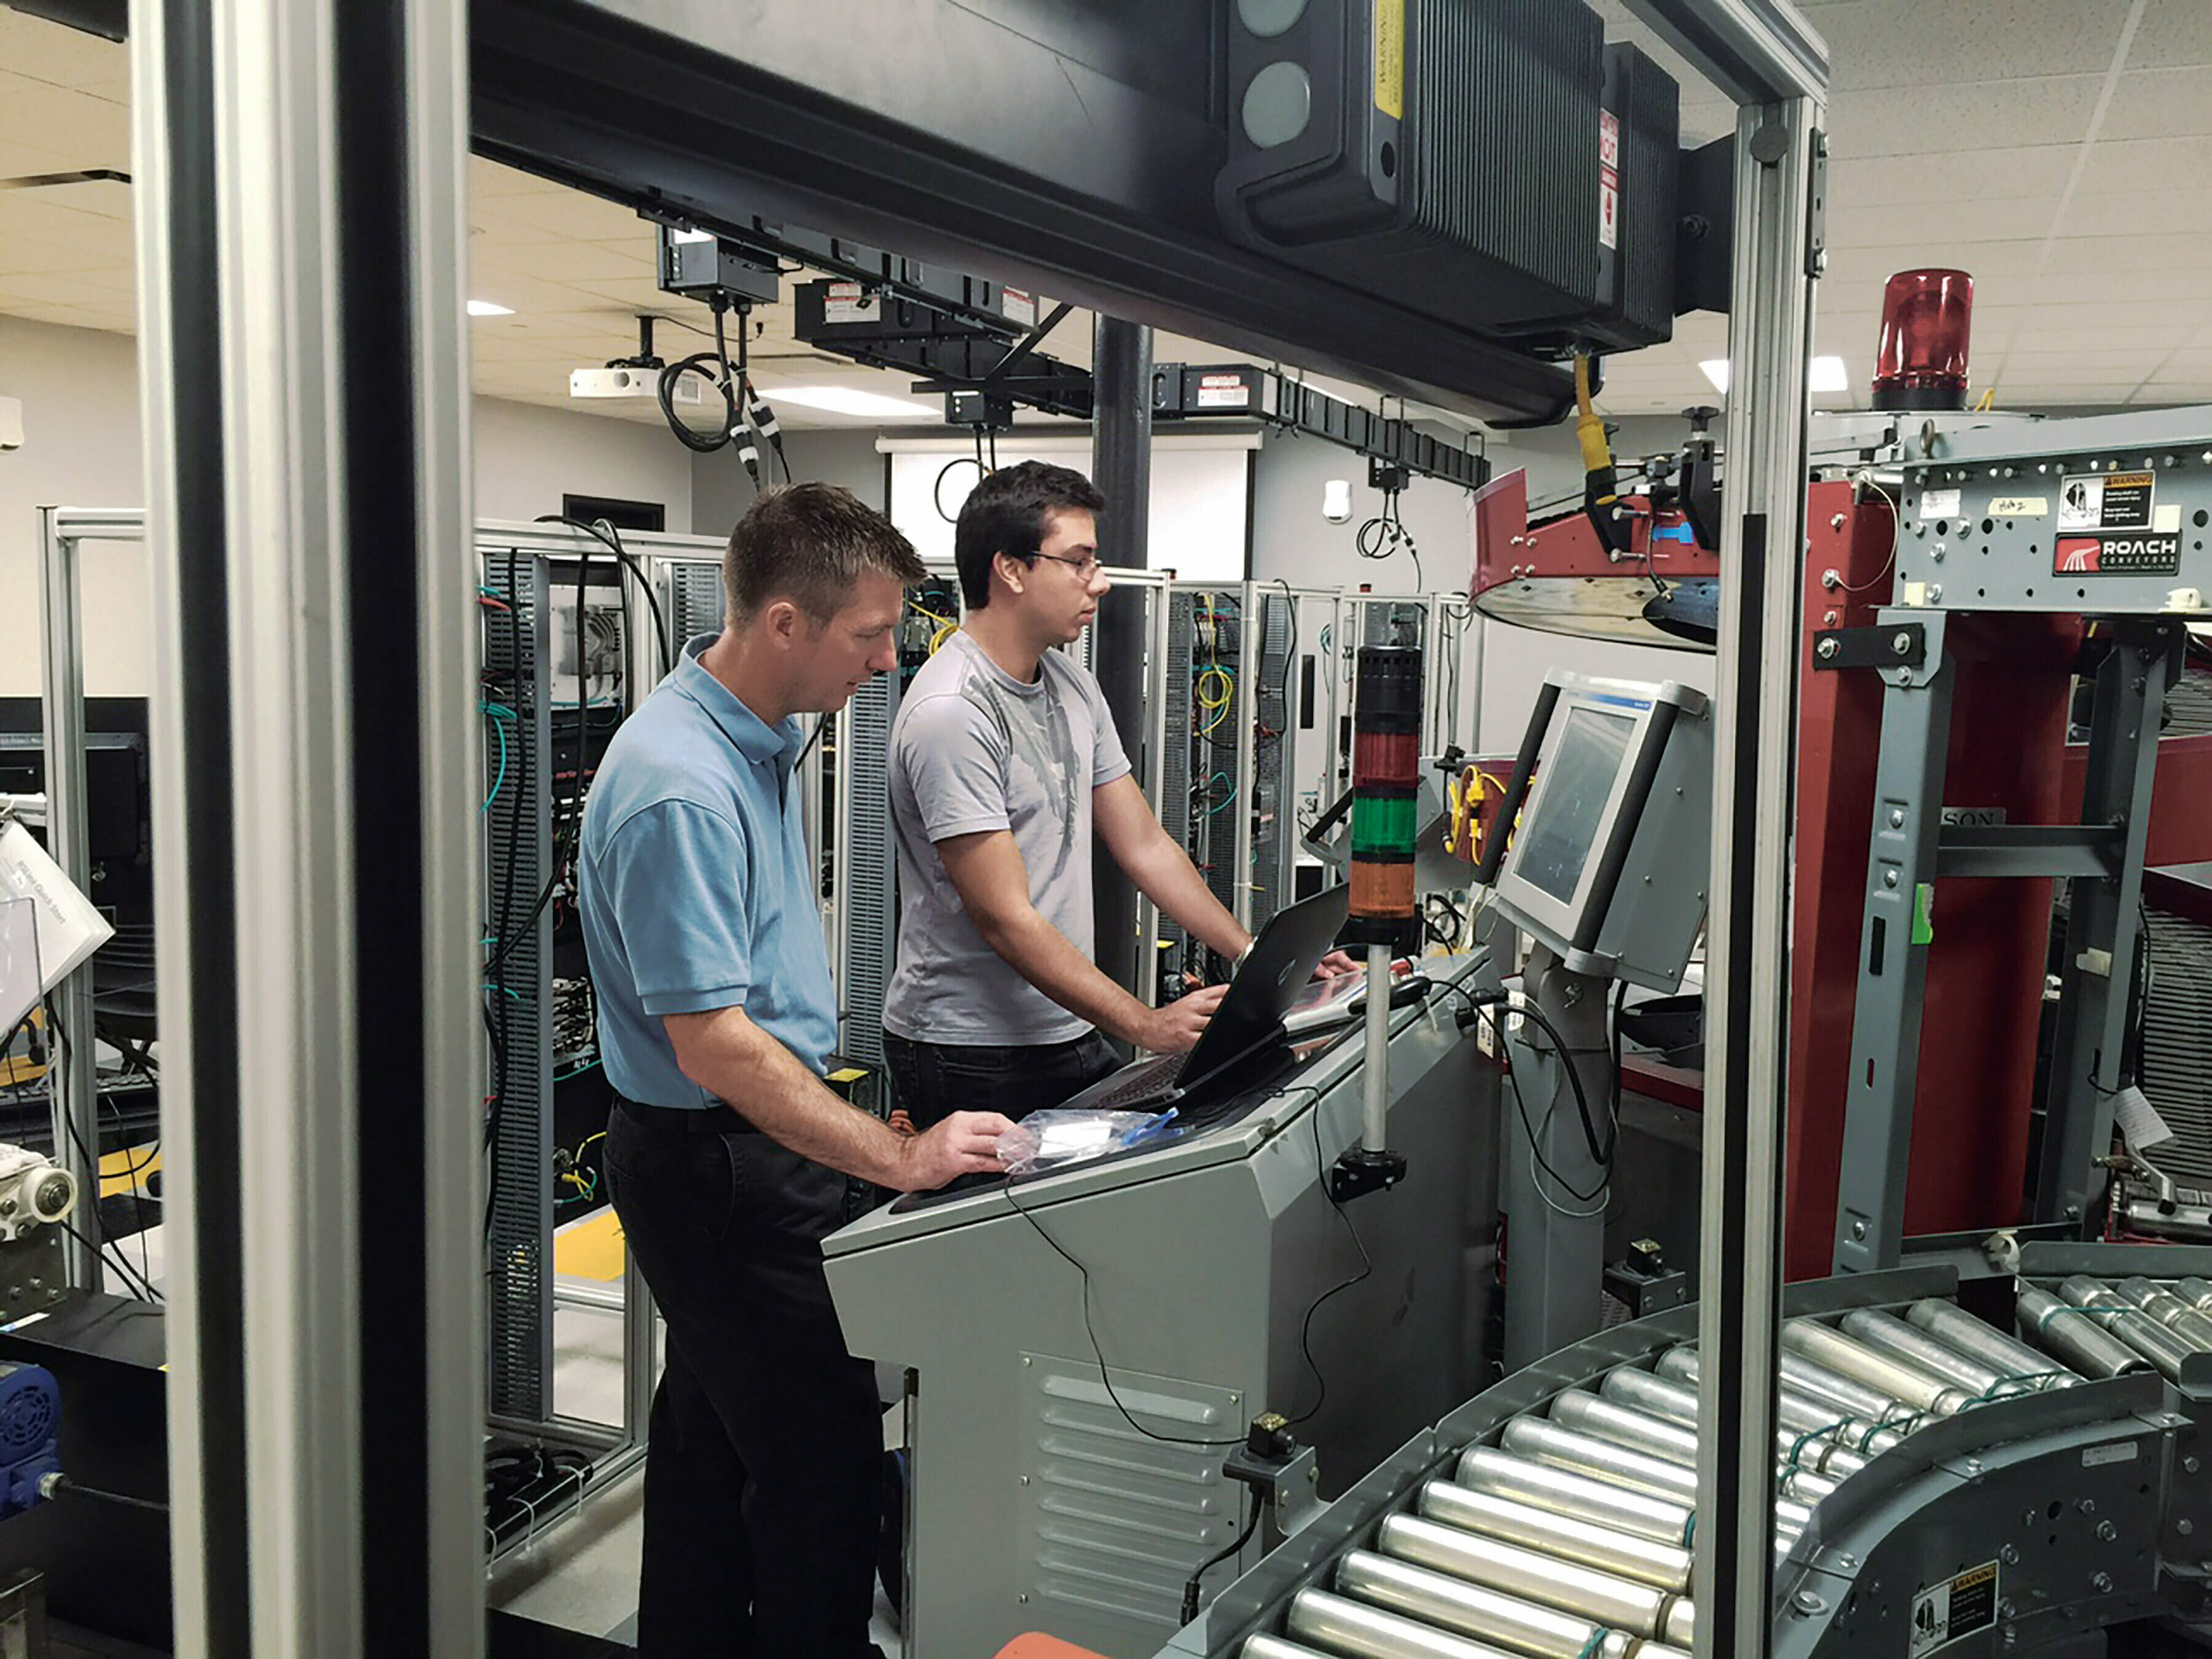 Purdue University Northwest offers manufacturing training